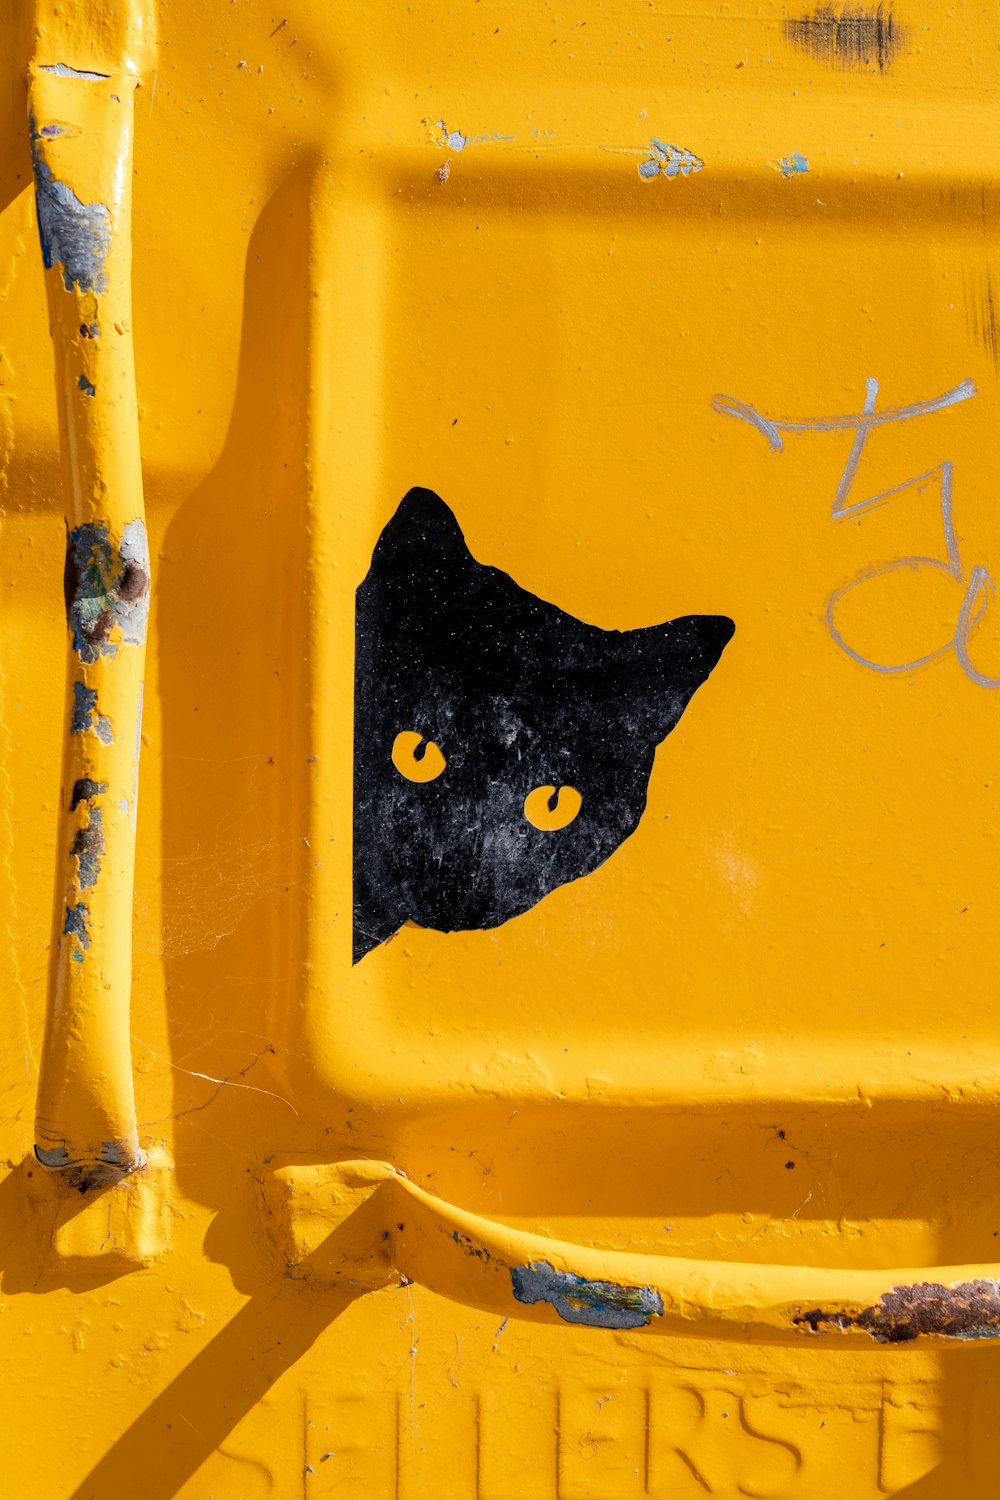 black cat on yellow metal bar